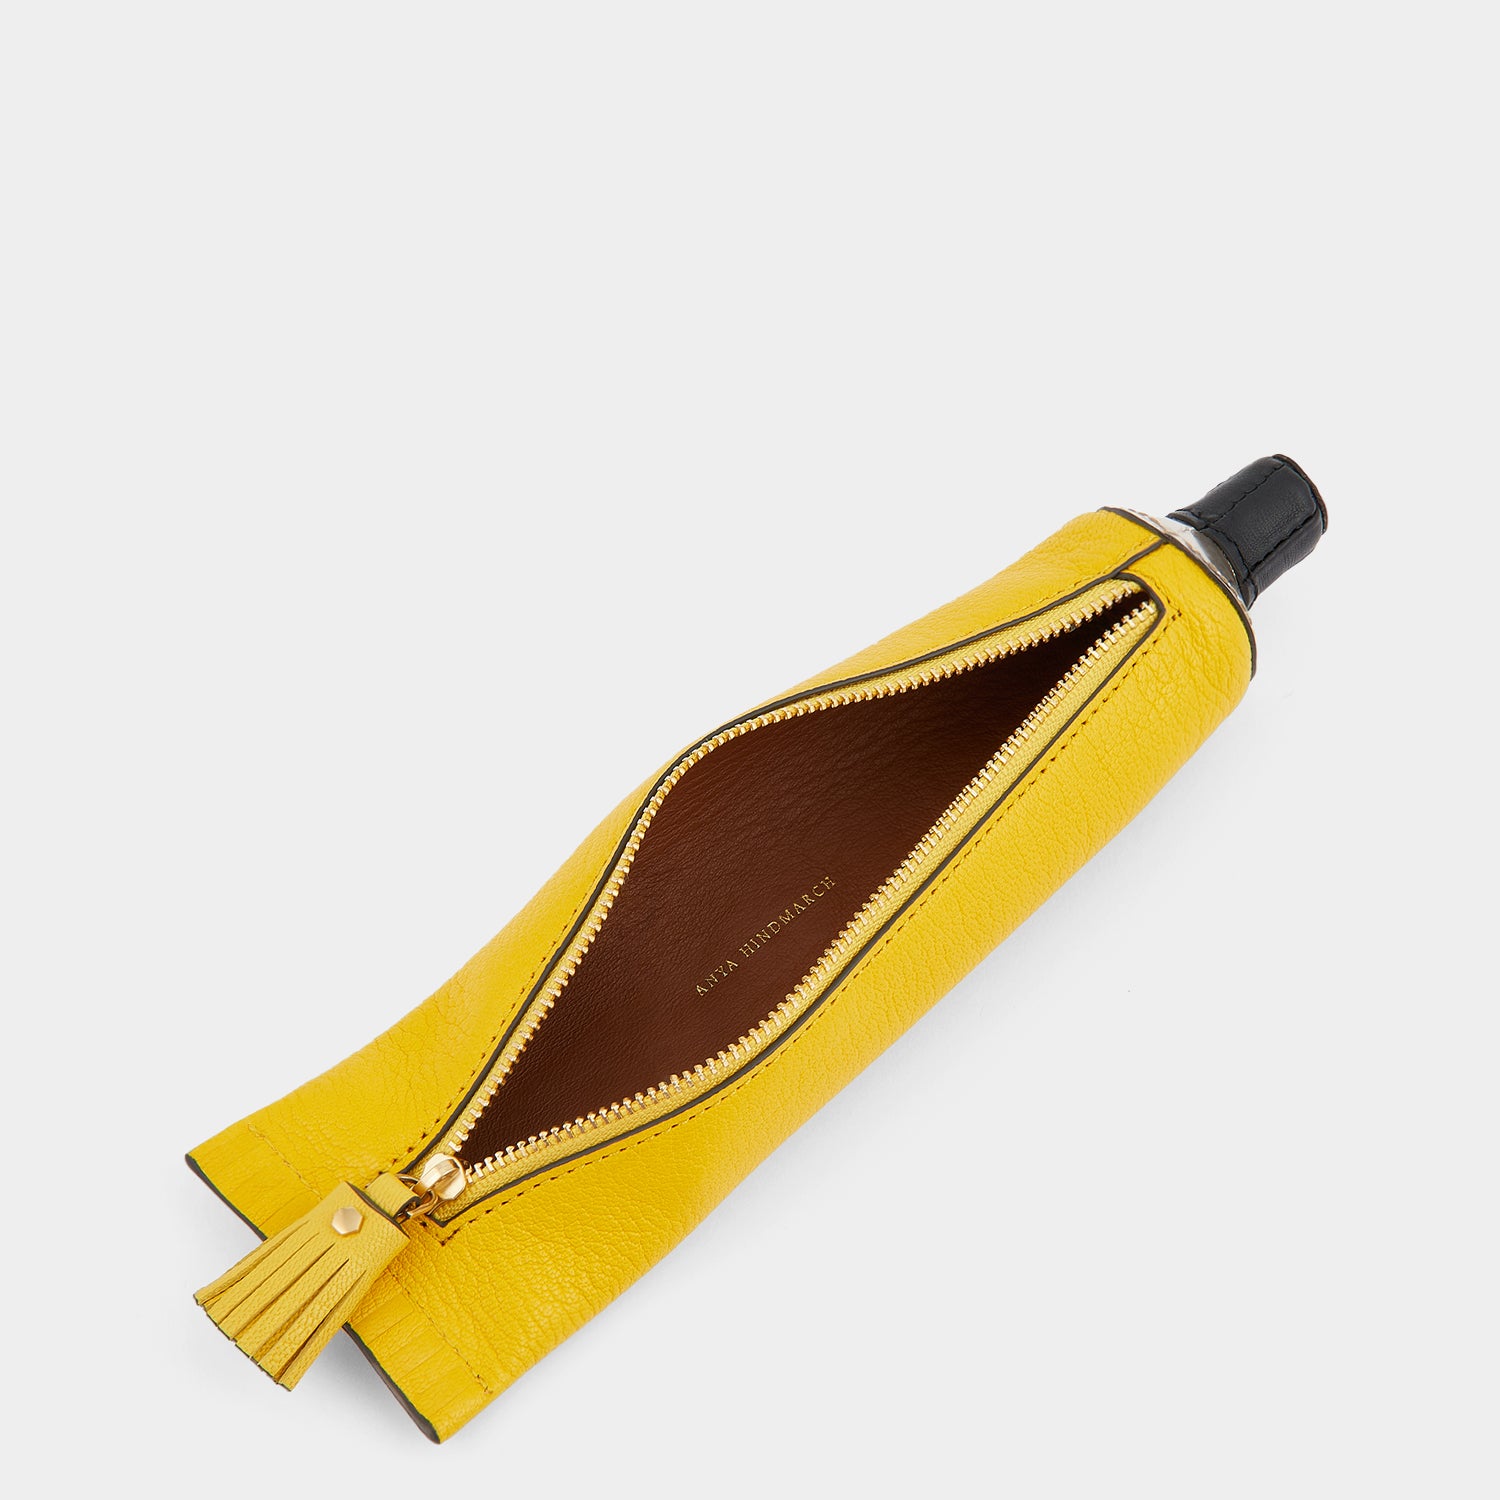 「UHU」ペンケース -

                  
                    Capra Leather in Yellow -
                  

                  Anya Hindmarch JP
